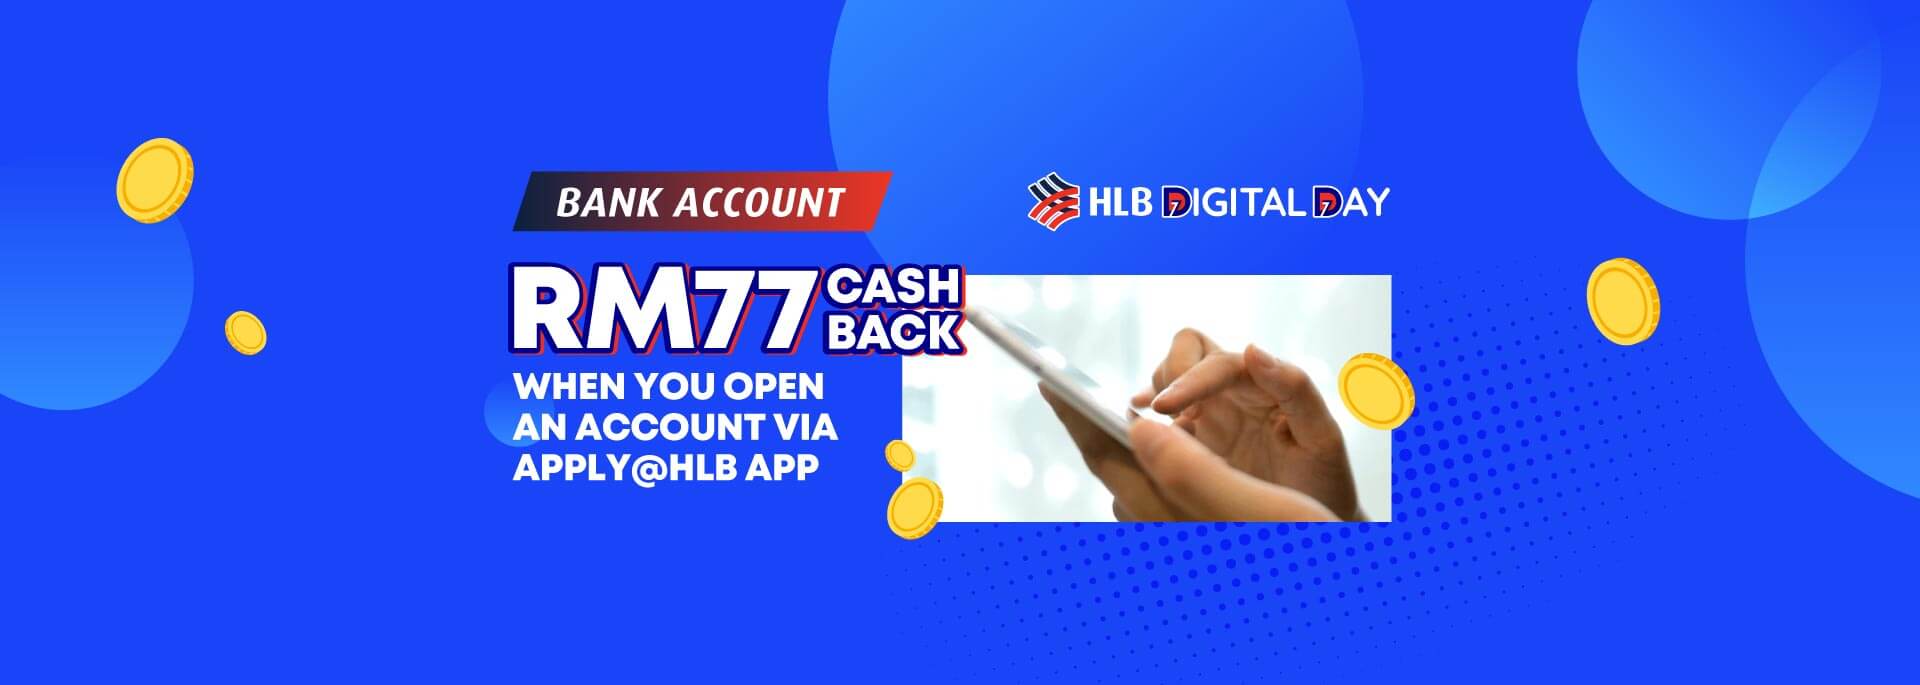 RM77 Cashback when you open an account via Apply@HLB App